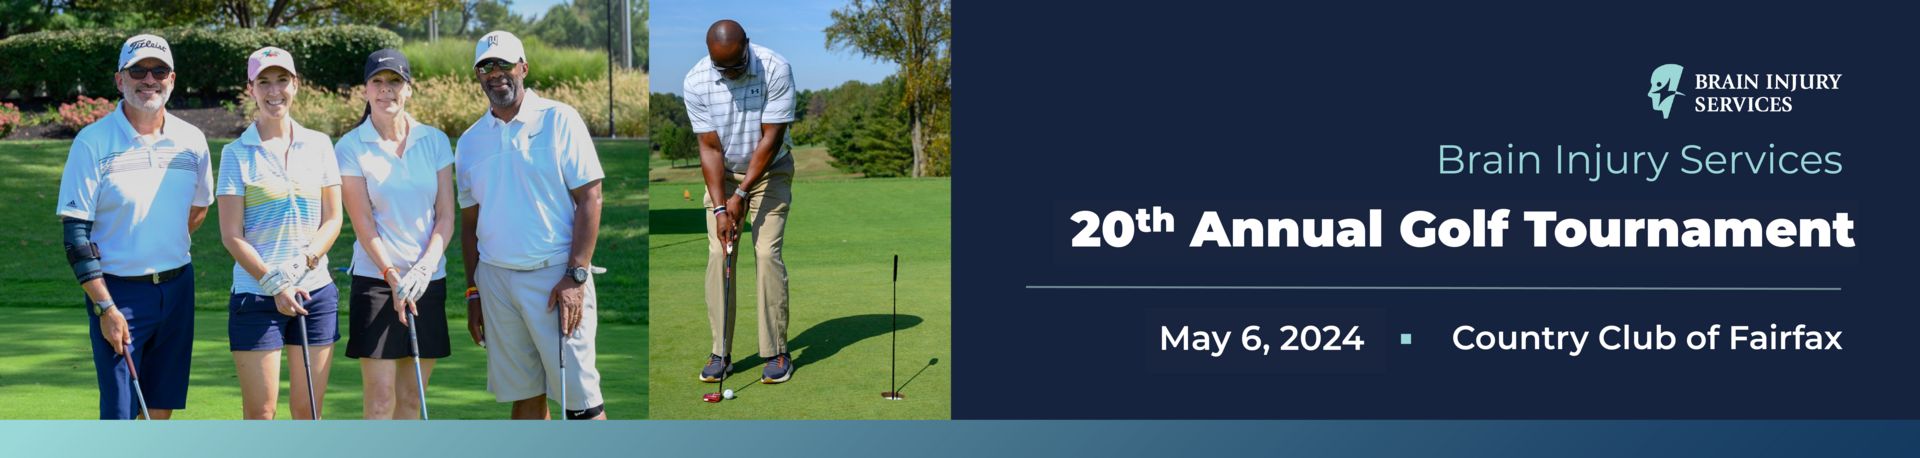 Brain Injury Services - 20th Annual Charity Golf Tournament, Fairfax, Virginia, United States